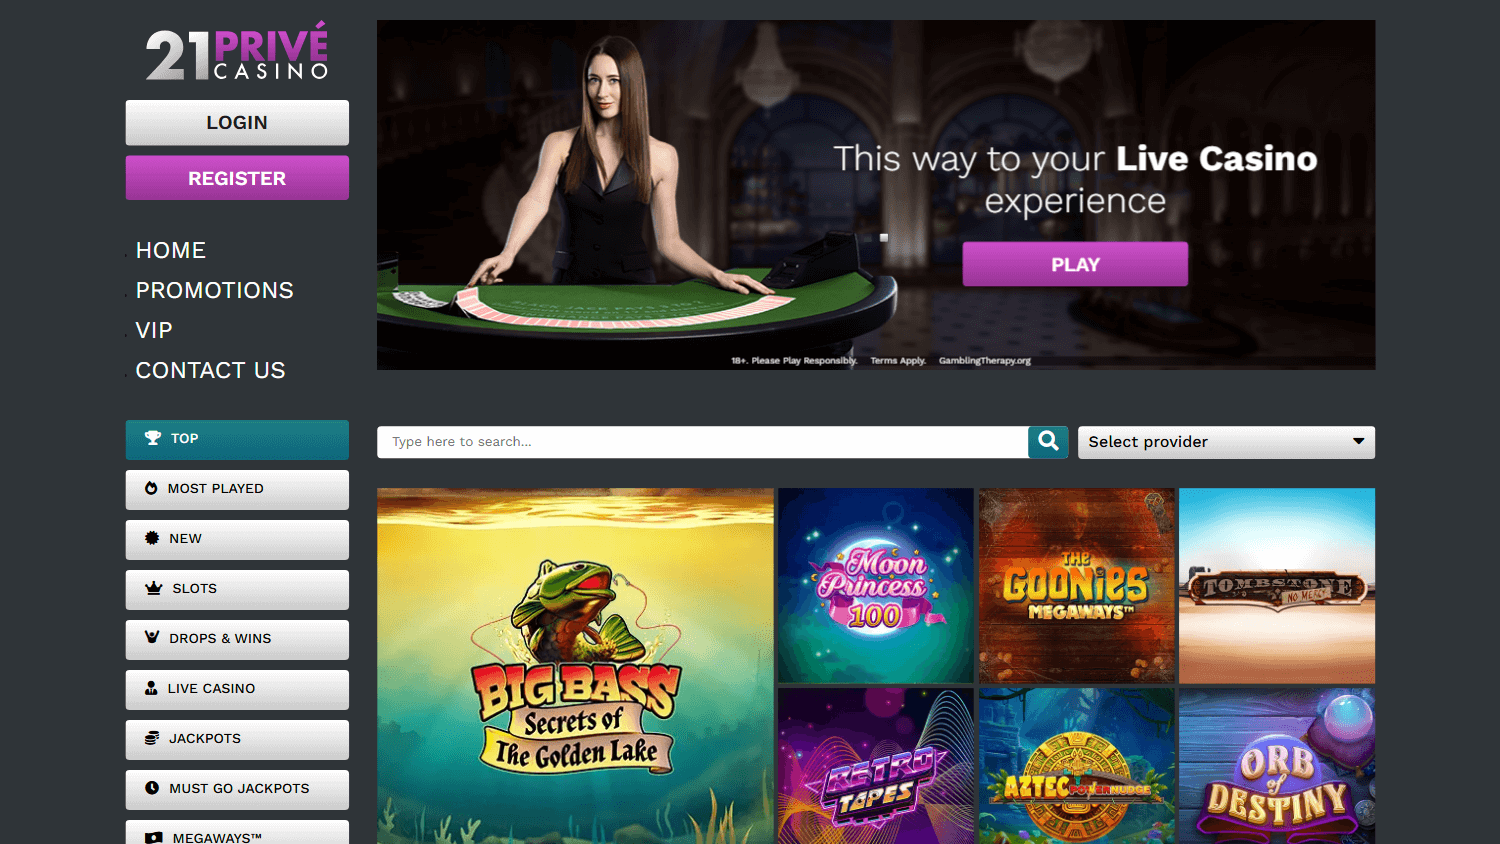 21_prive_casino_game_gallery_desktop